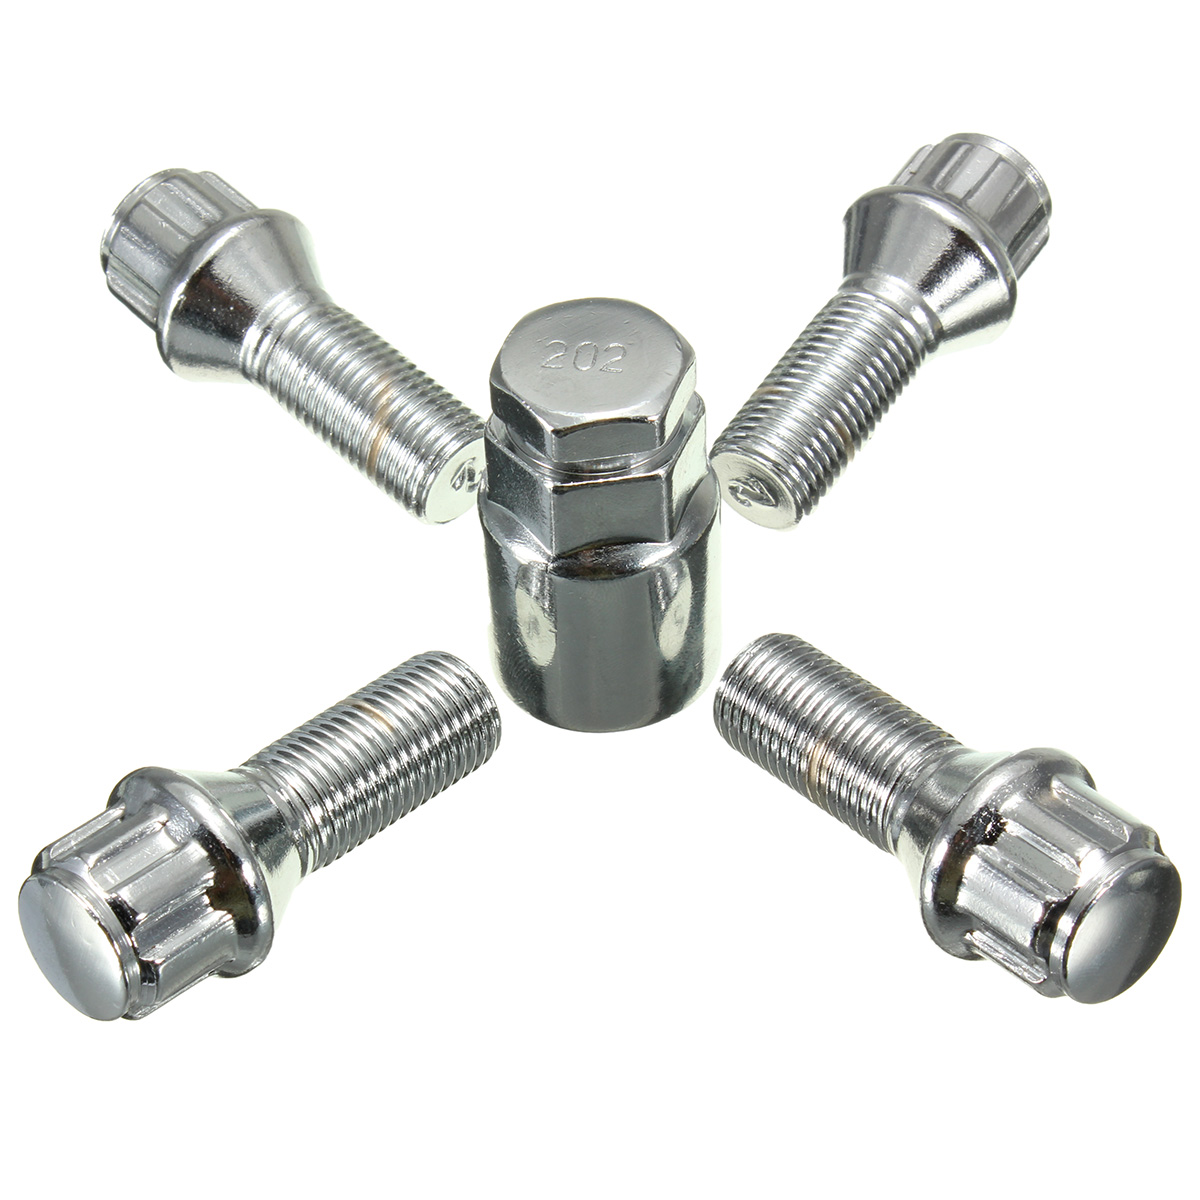 FORFOC Premium wheel locking nuts M12x1,5 anti-theft bolts for alloys set of 4 removal key T2